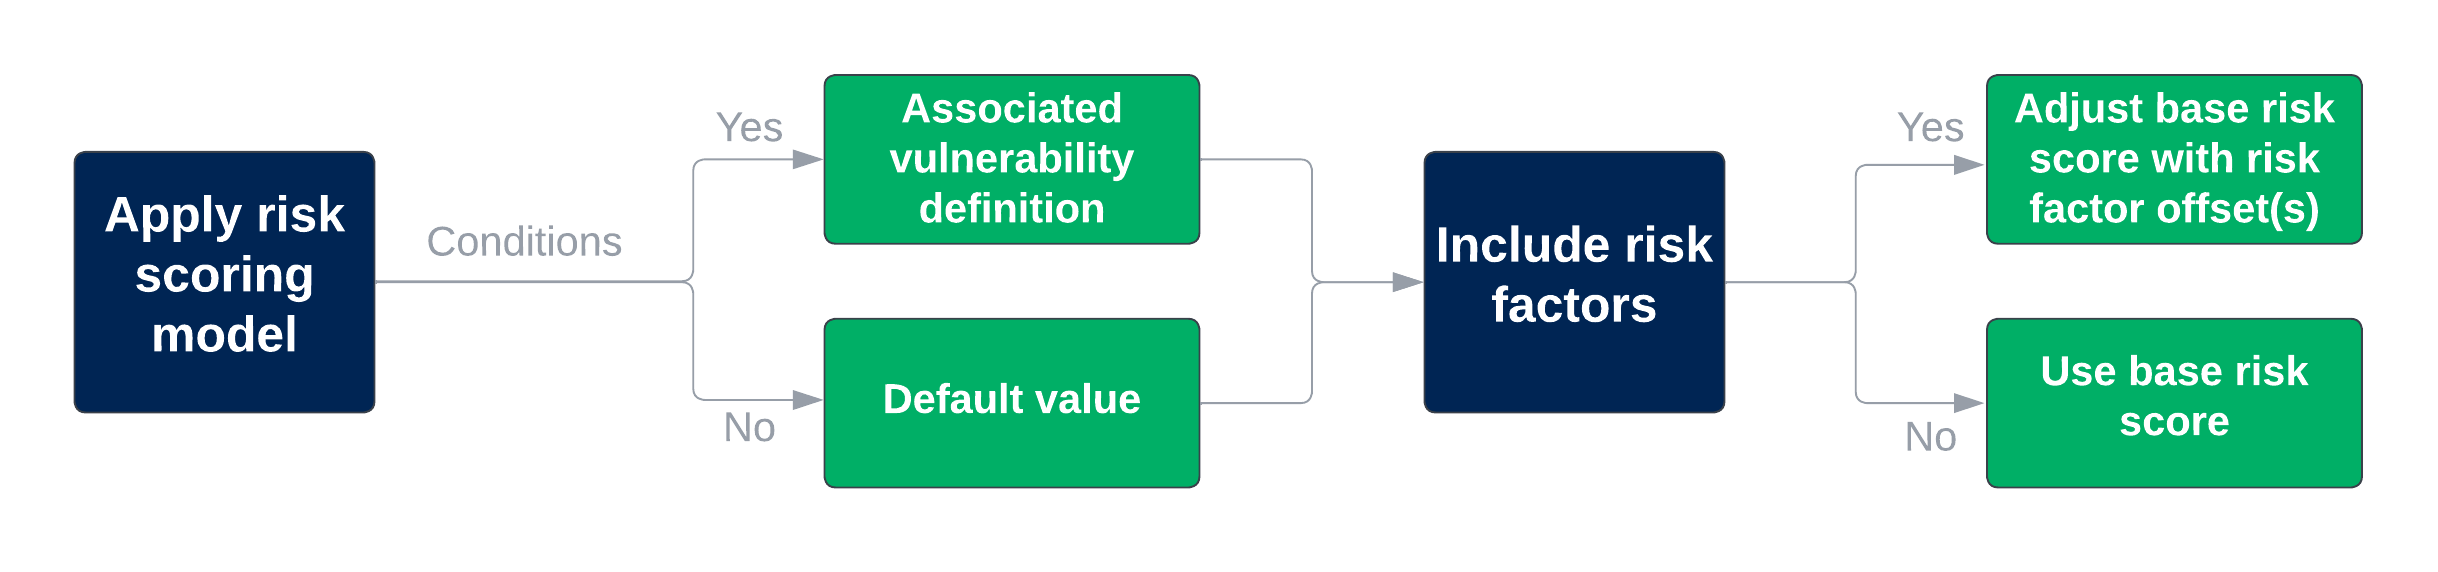 Vulnerability model risk scoring process